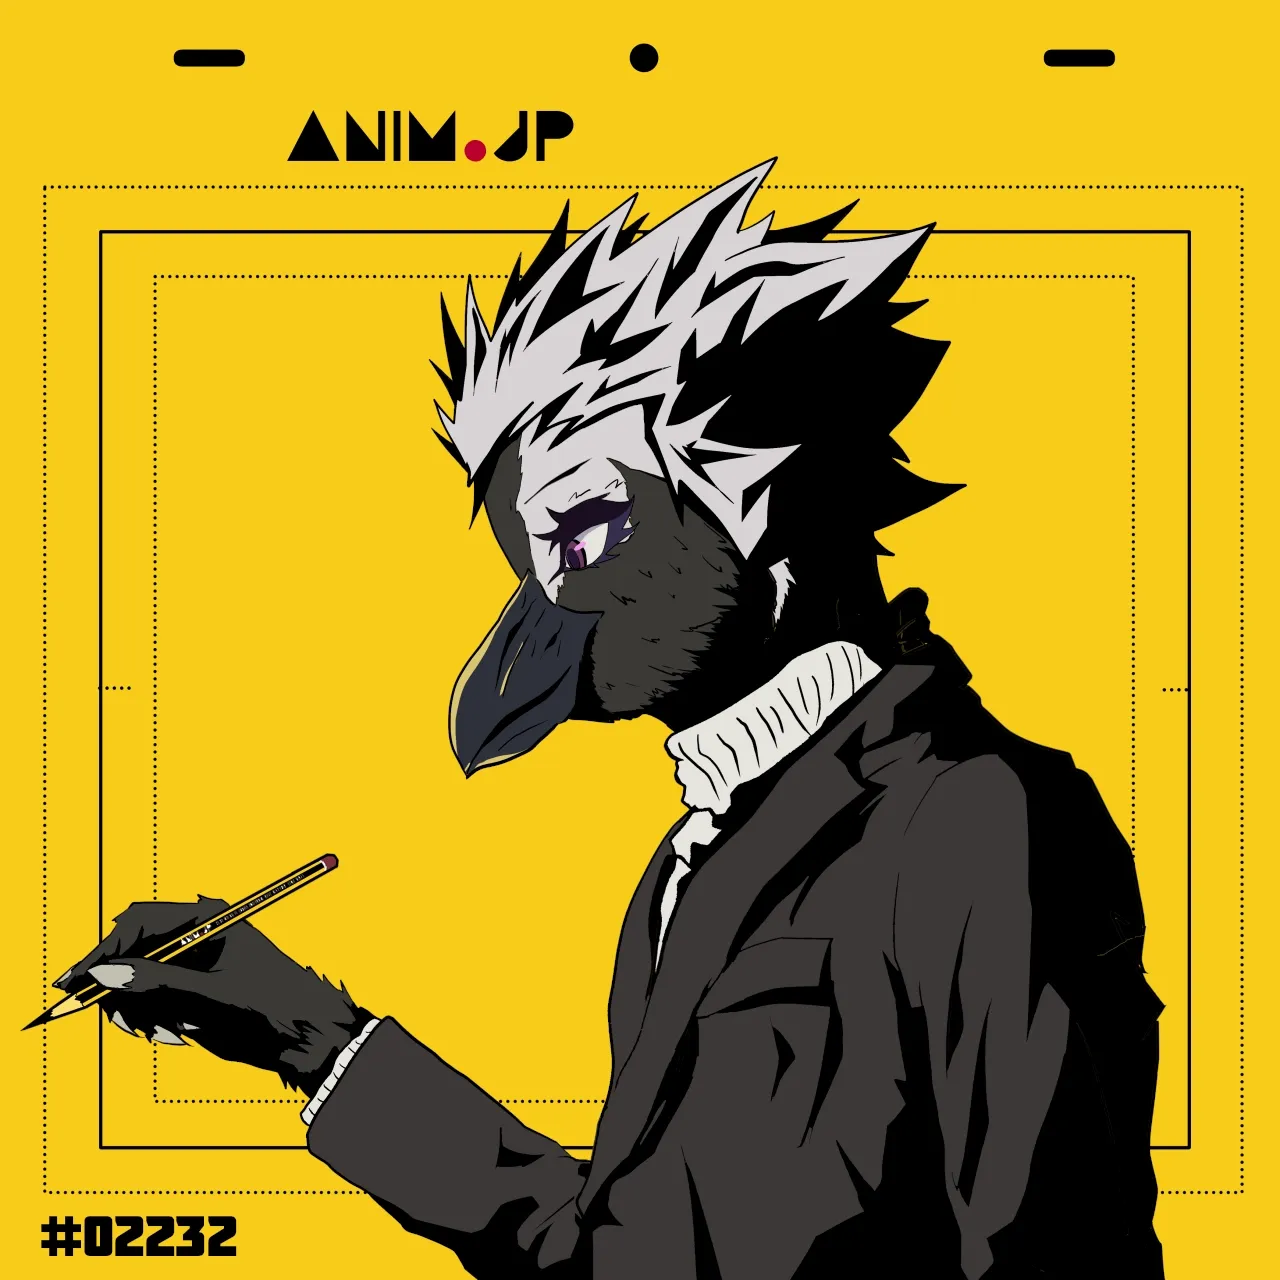 ANIM.JP #02232